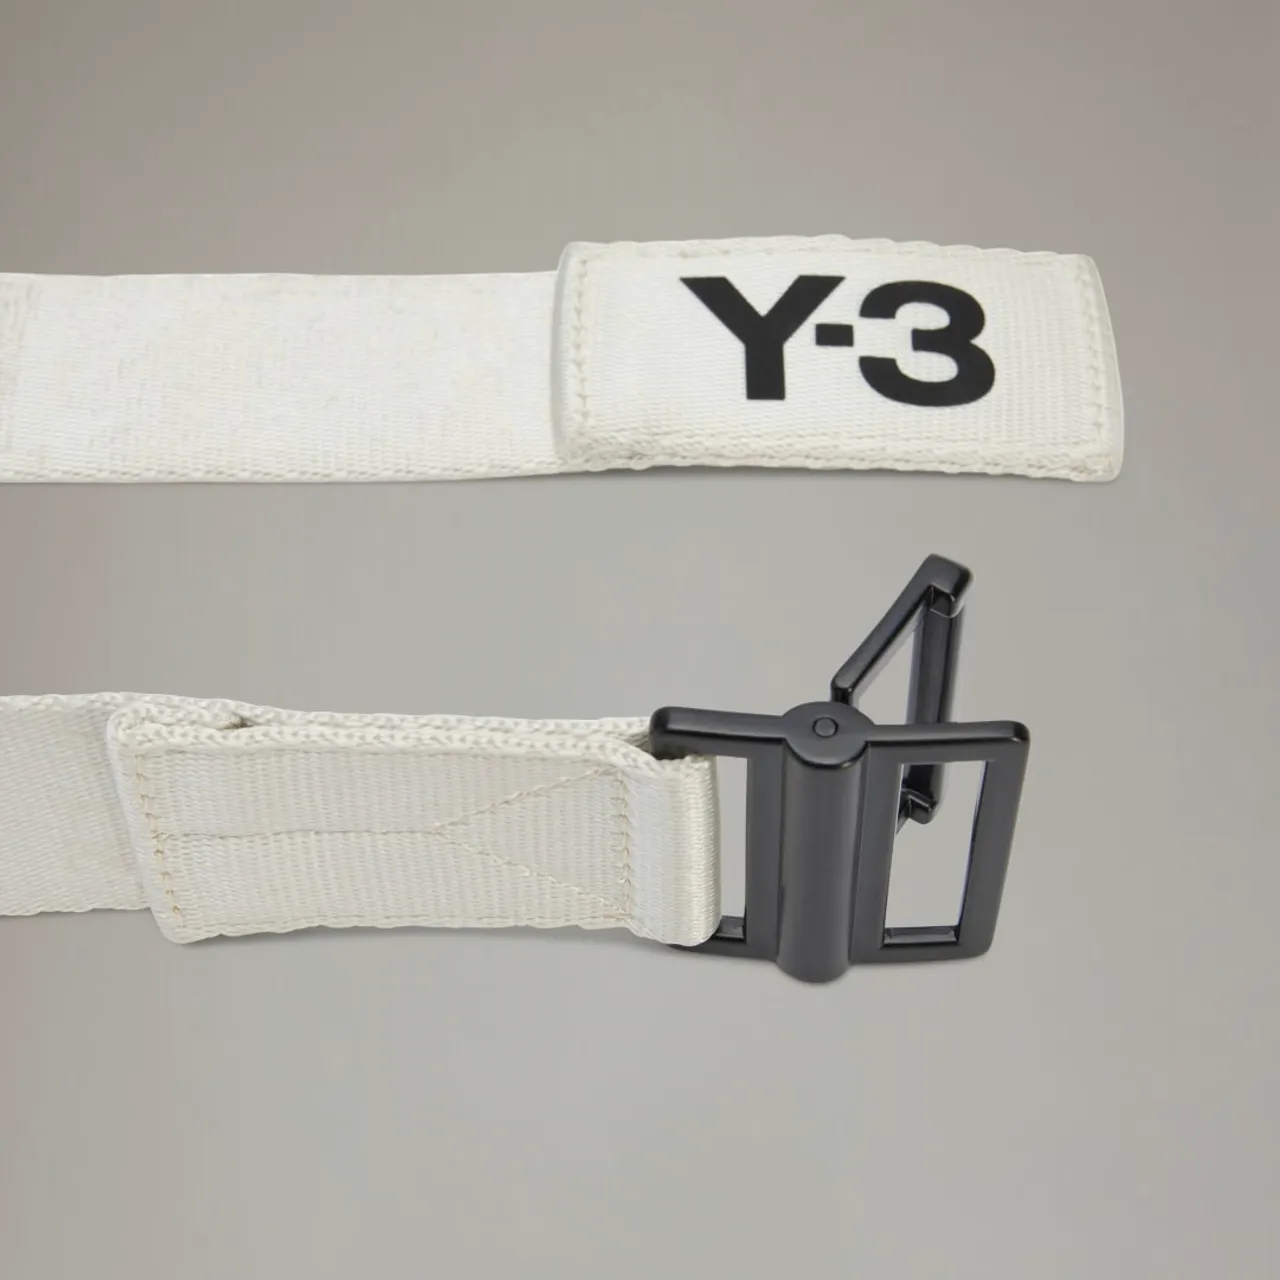 Y-3 Belt